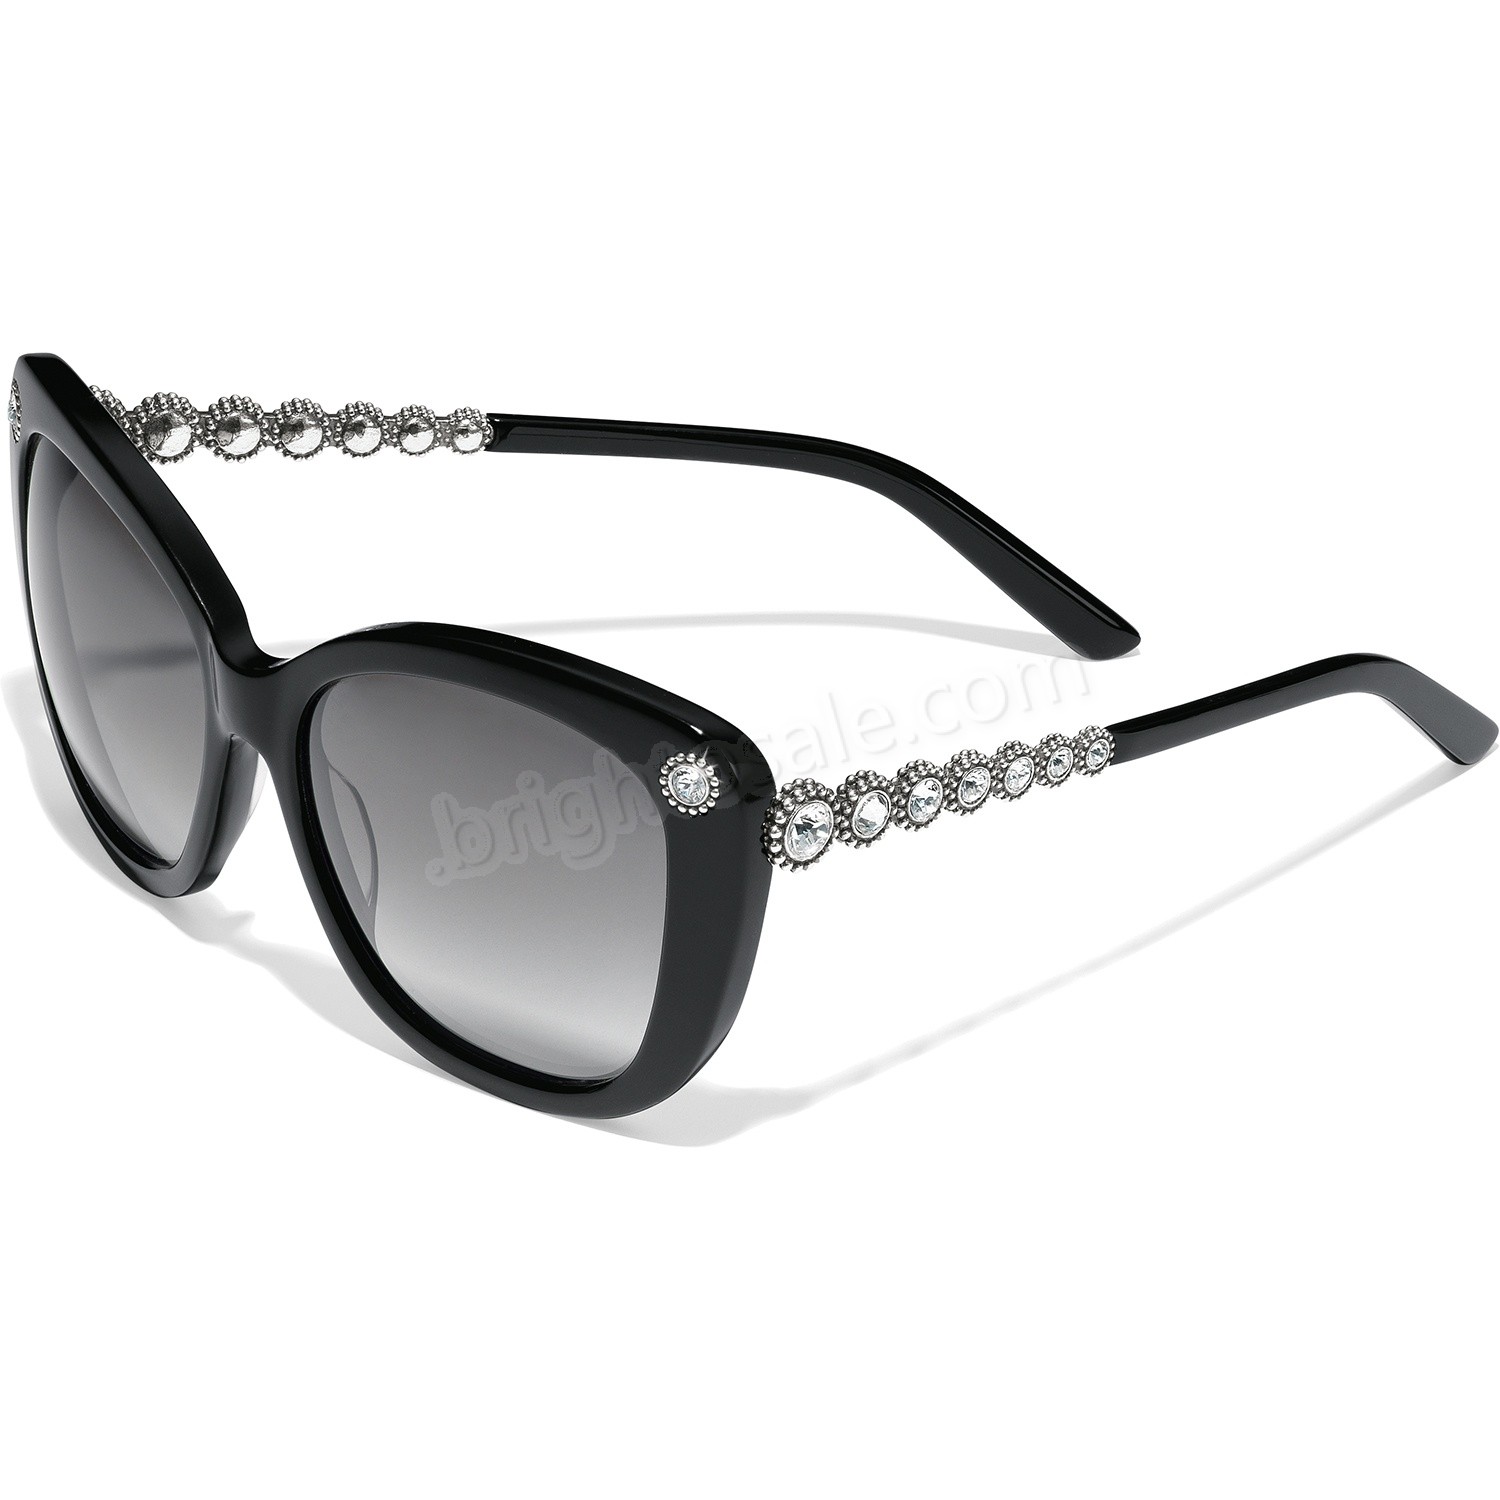 Brighton Collectibles & Online Discount Mamma Mia Sunglasses - Brighton Collectibles & Online Discount Mamma Mia Sunglasses